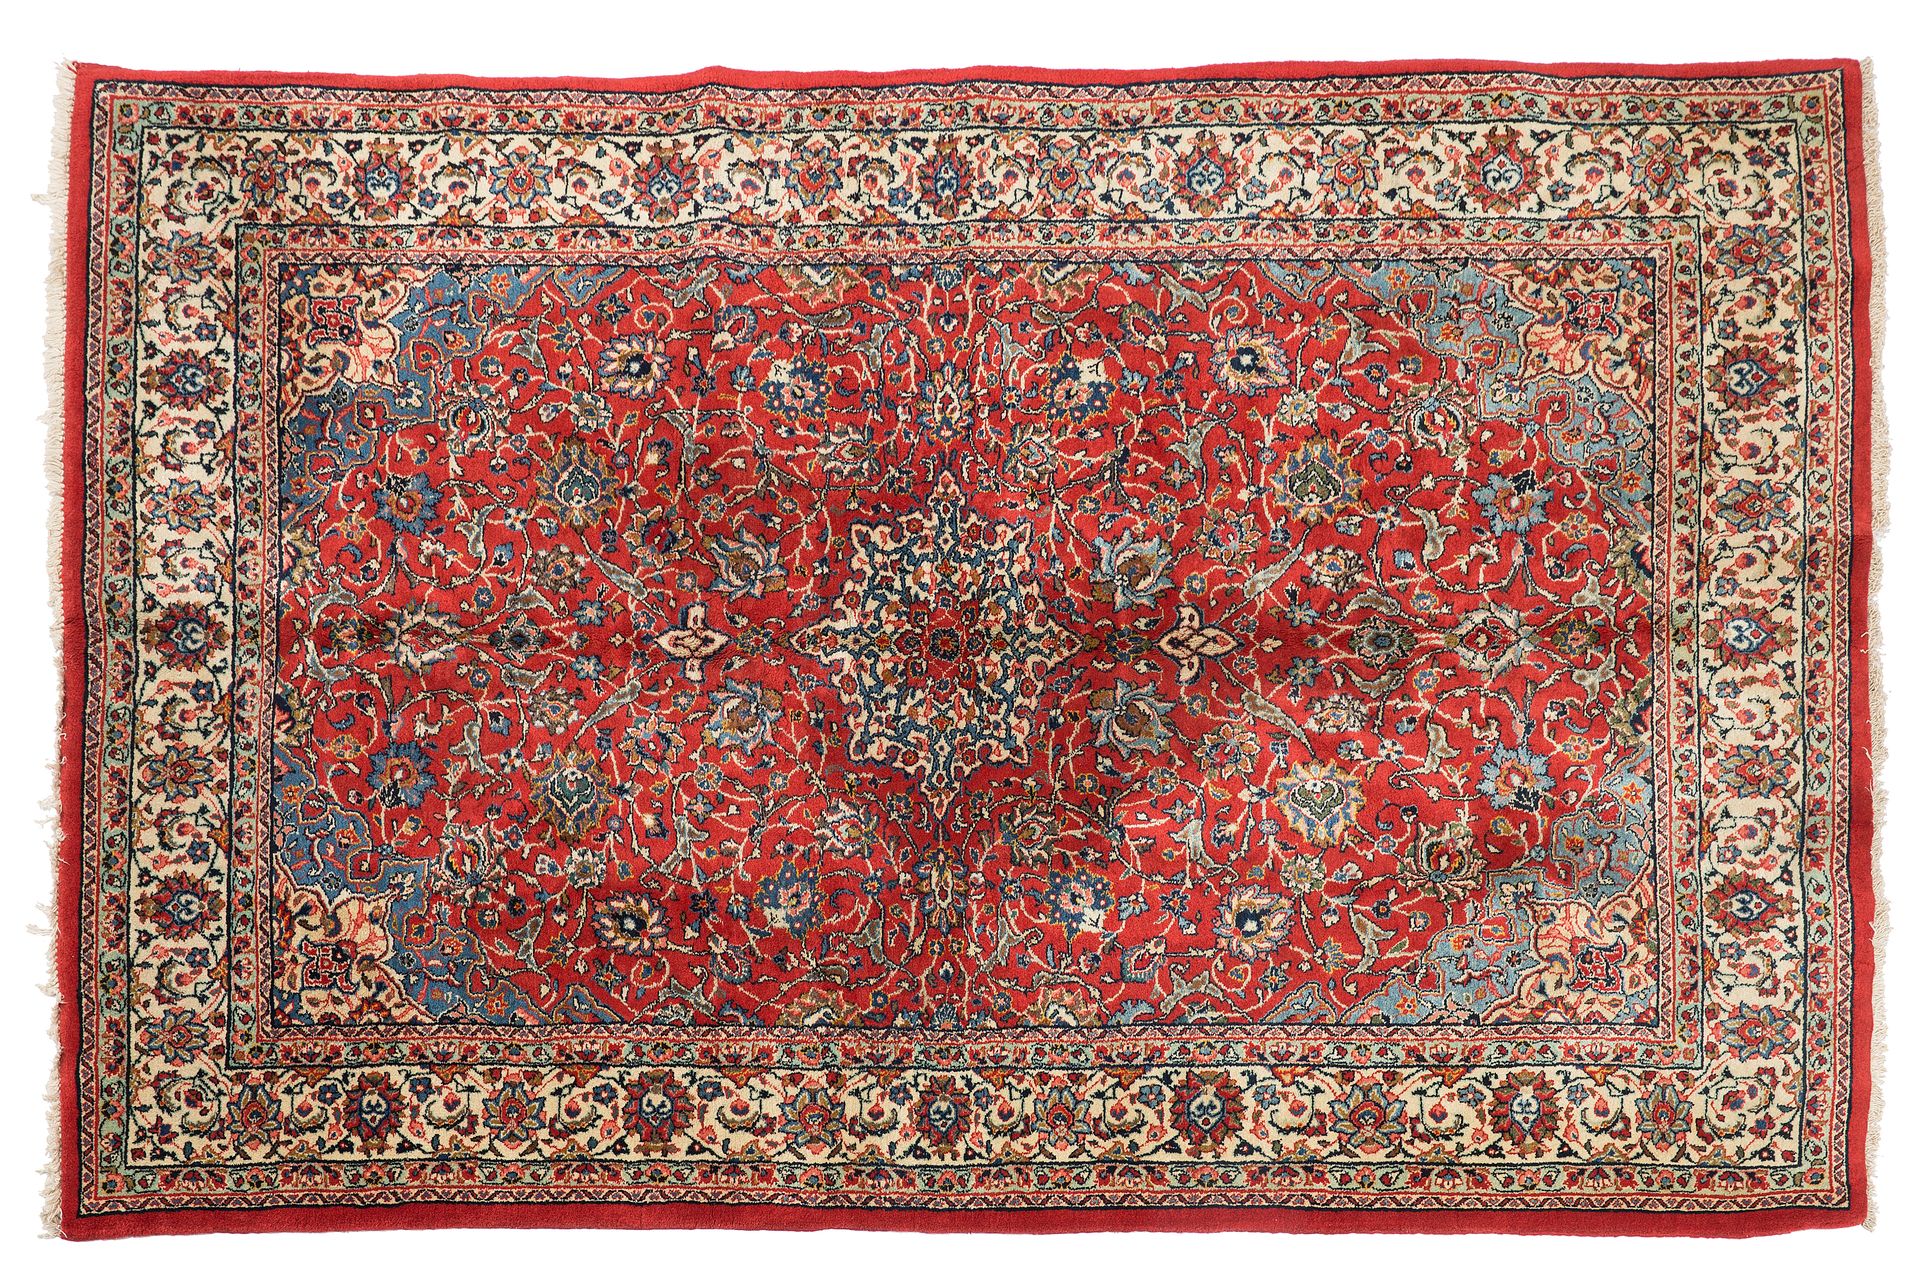 Null SAROUK carpet (Iran), mid 20th century

Dimensions : 280 x 185cm.

Technica&hellip;